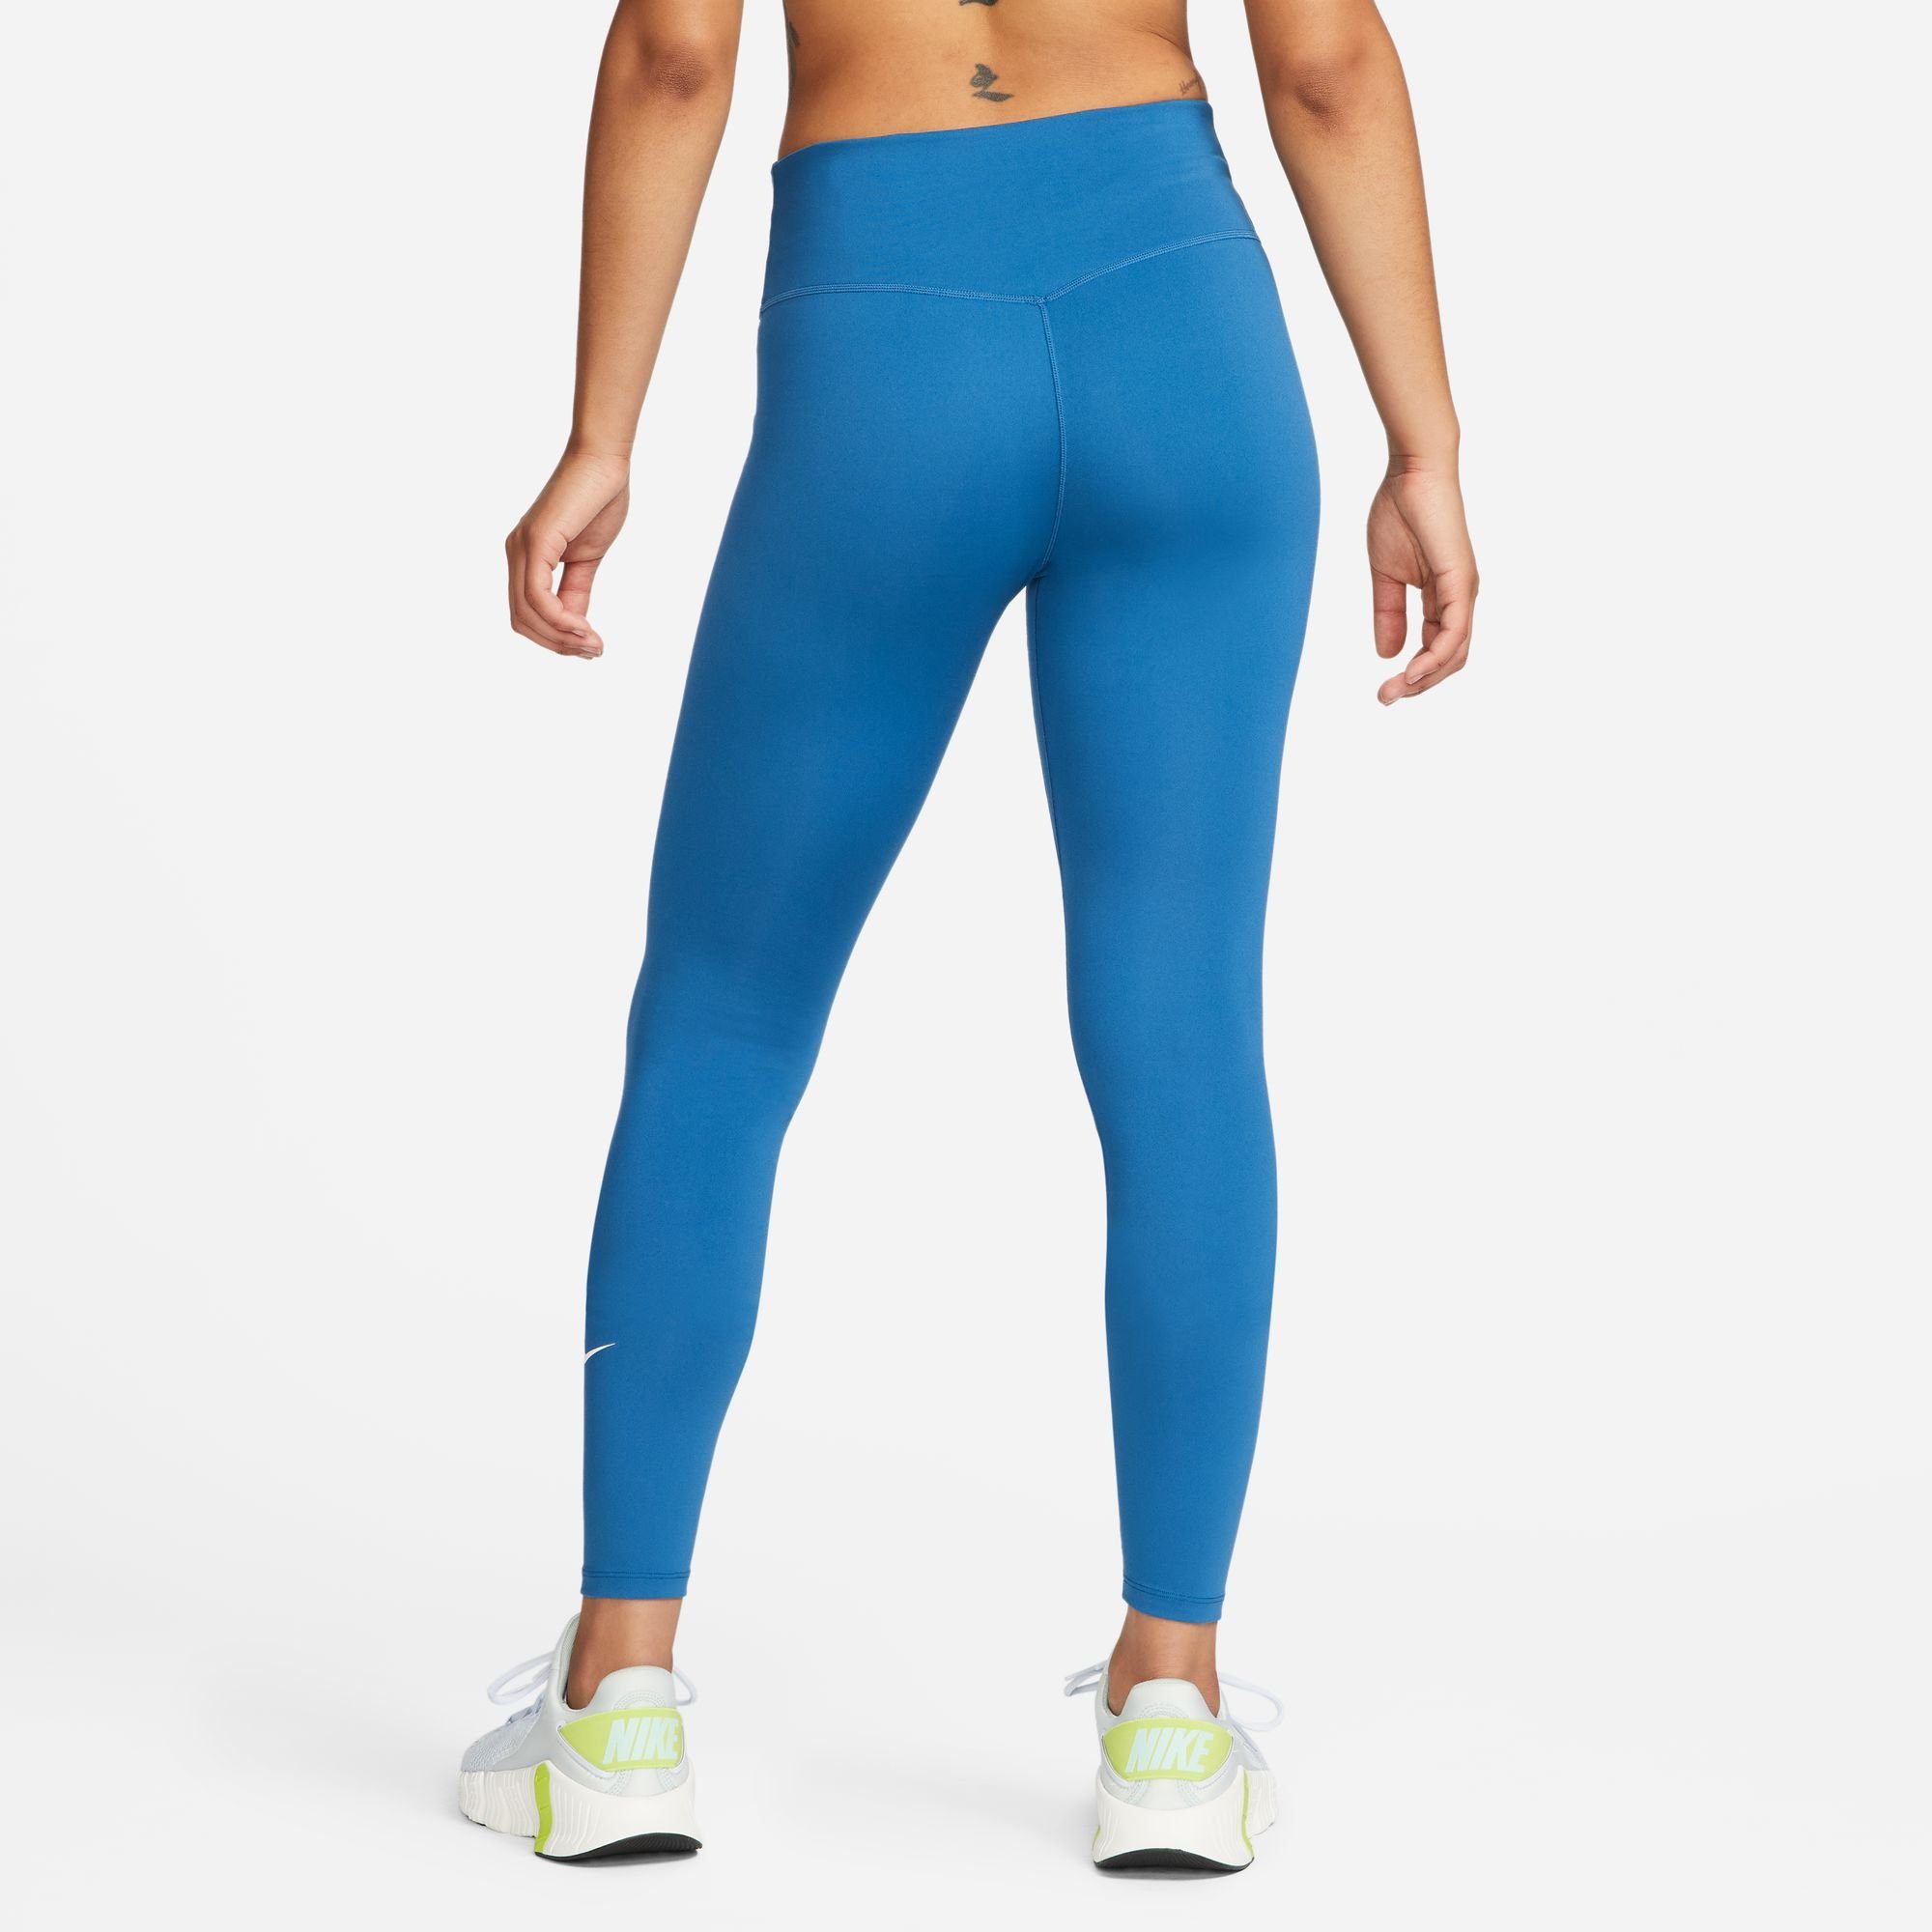 ONE Nike WOMEN'S MID-RISE LEGGINGS BLUE/WHITE INDUSTRIAL Trainingstights